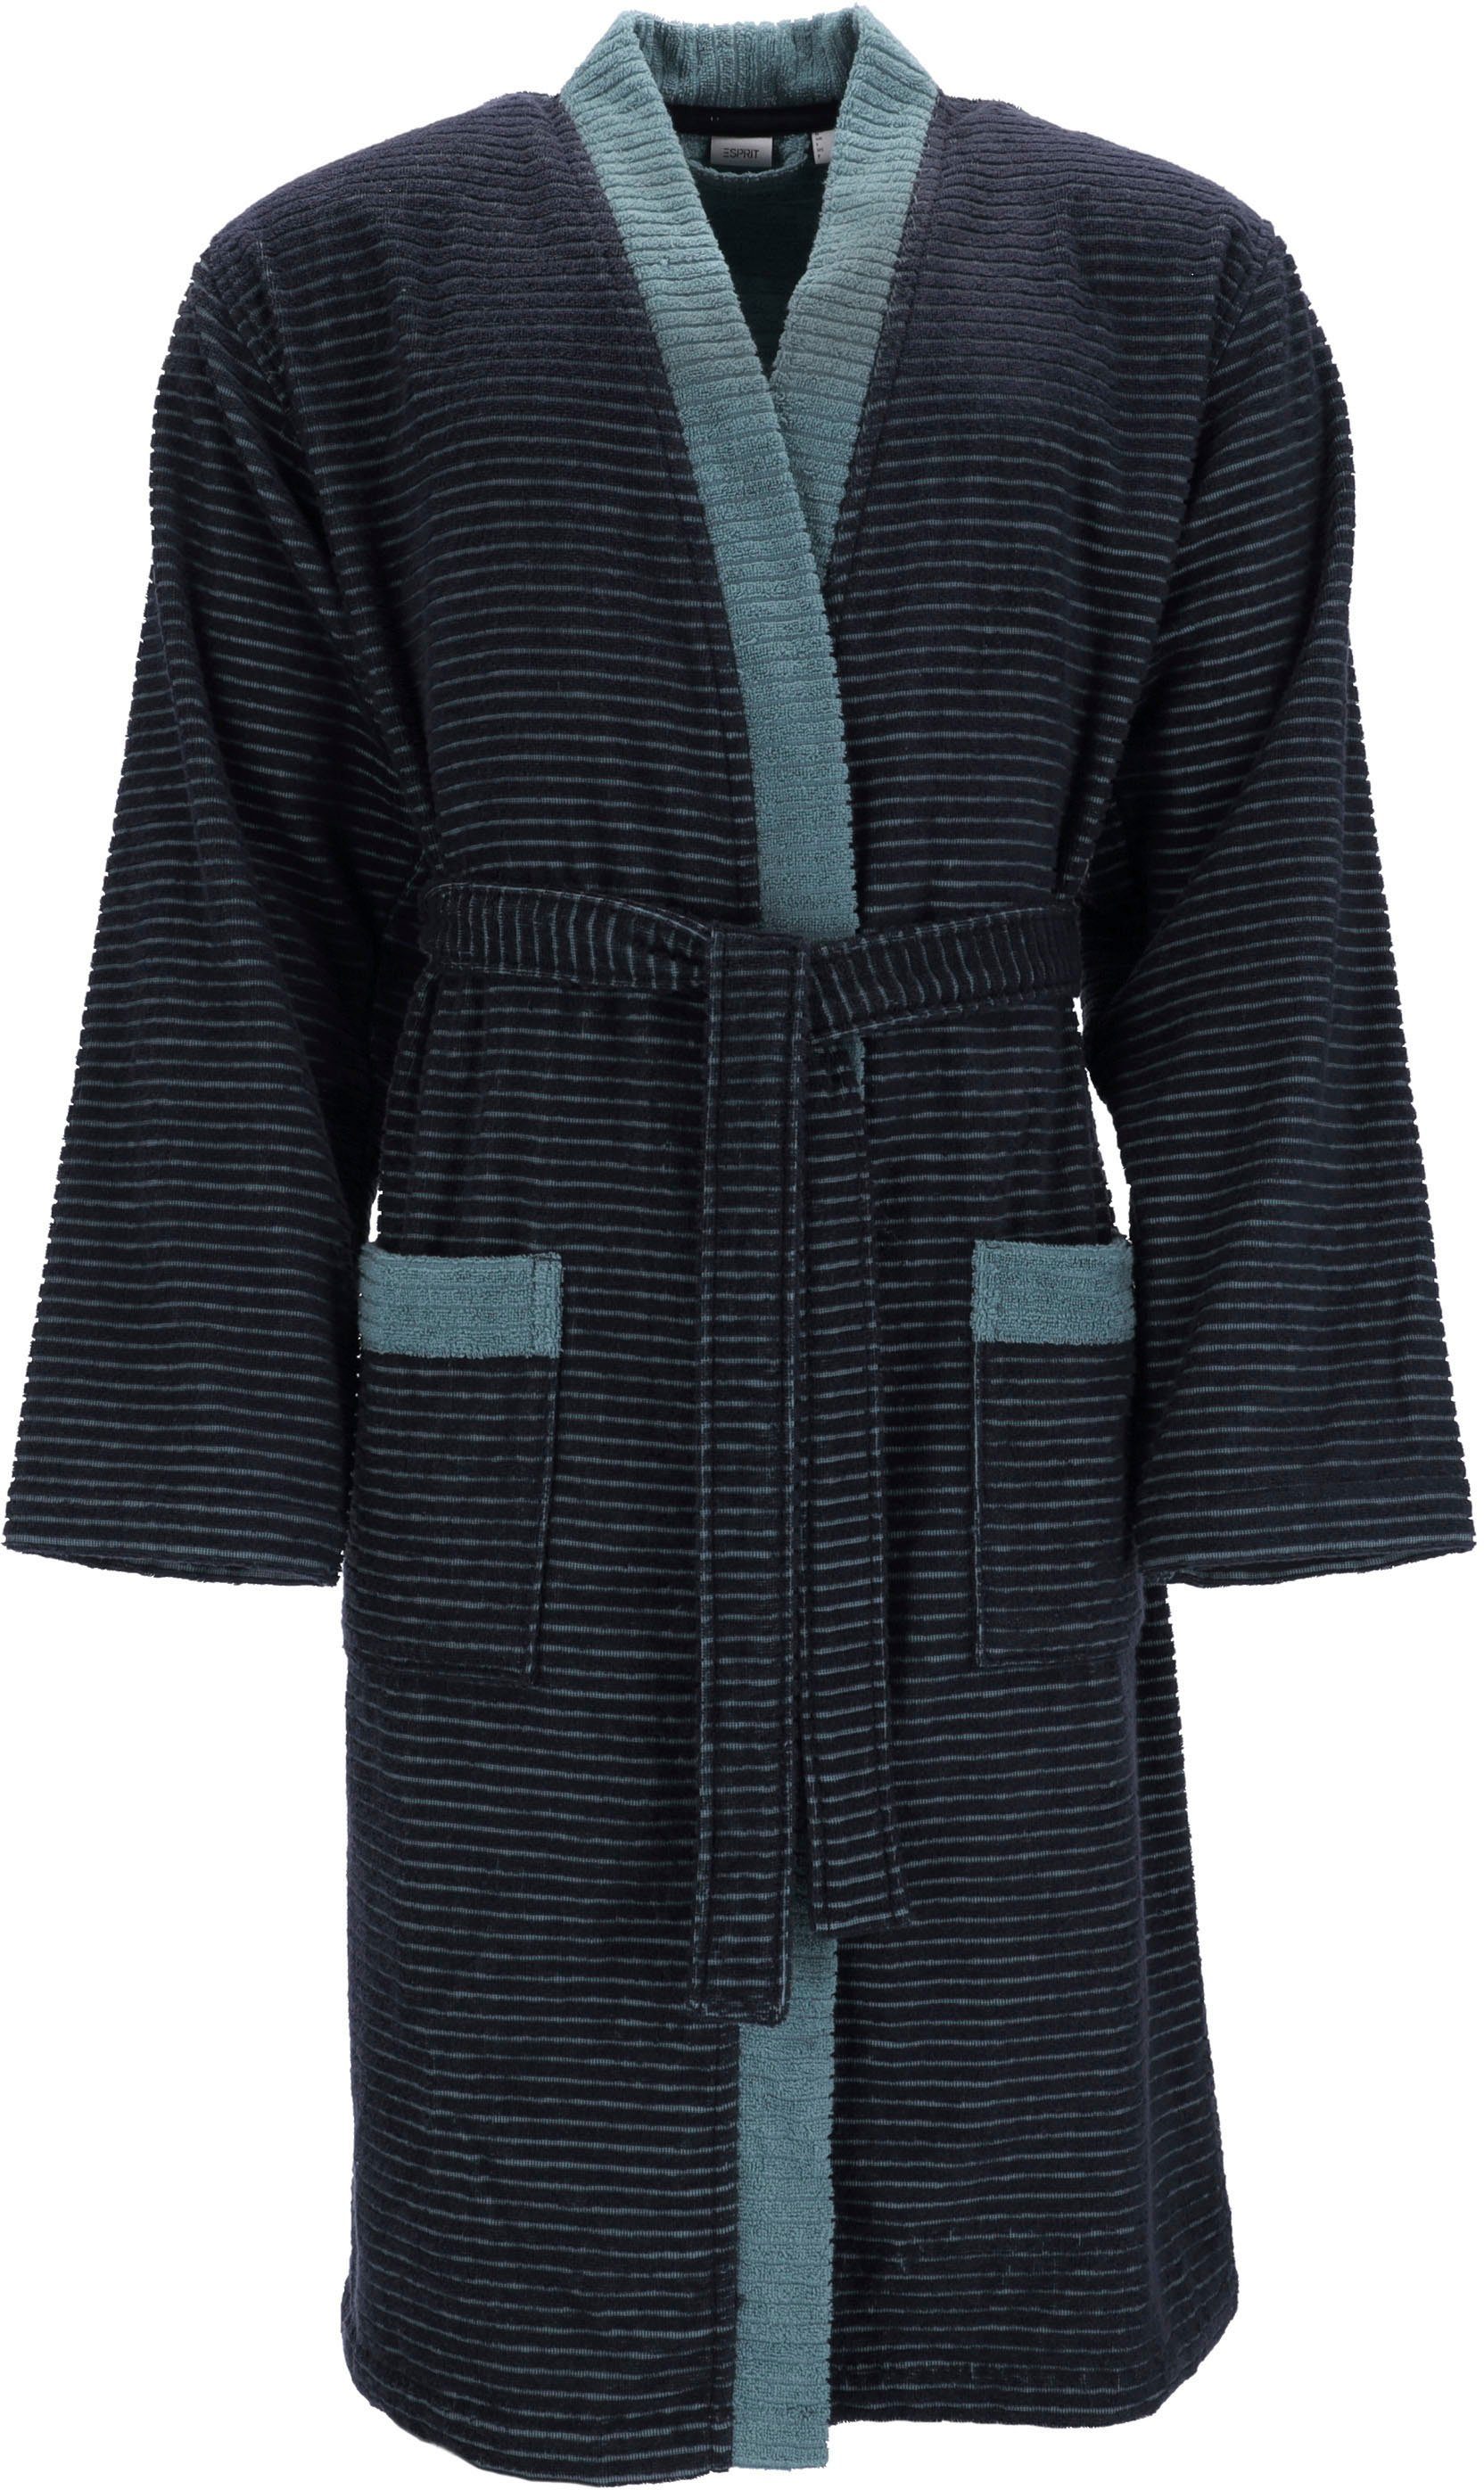 Förderungsbereich Esprit Herrenbademantel Gürtel, Kimono-Kragen, Doubleface navy Stripe, blue Double Langform, Kimonomantel Webfrottier